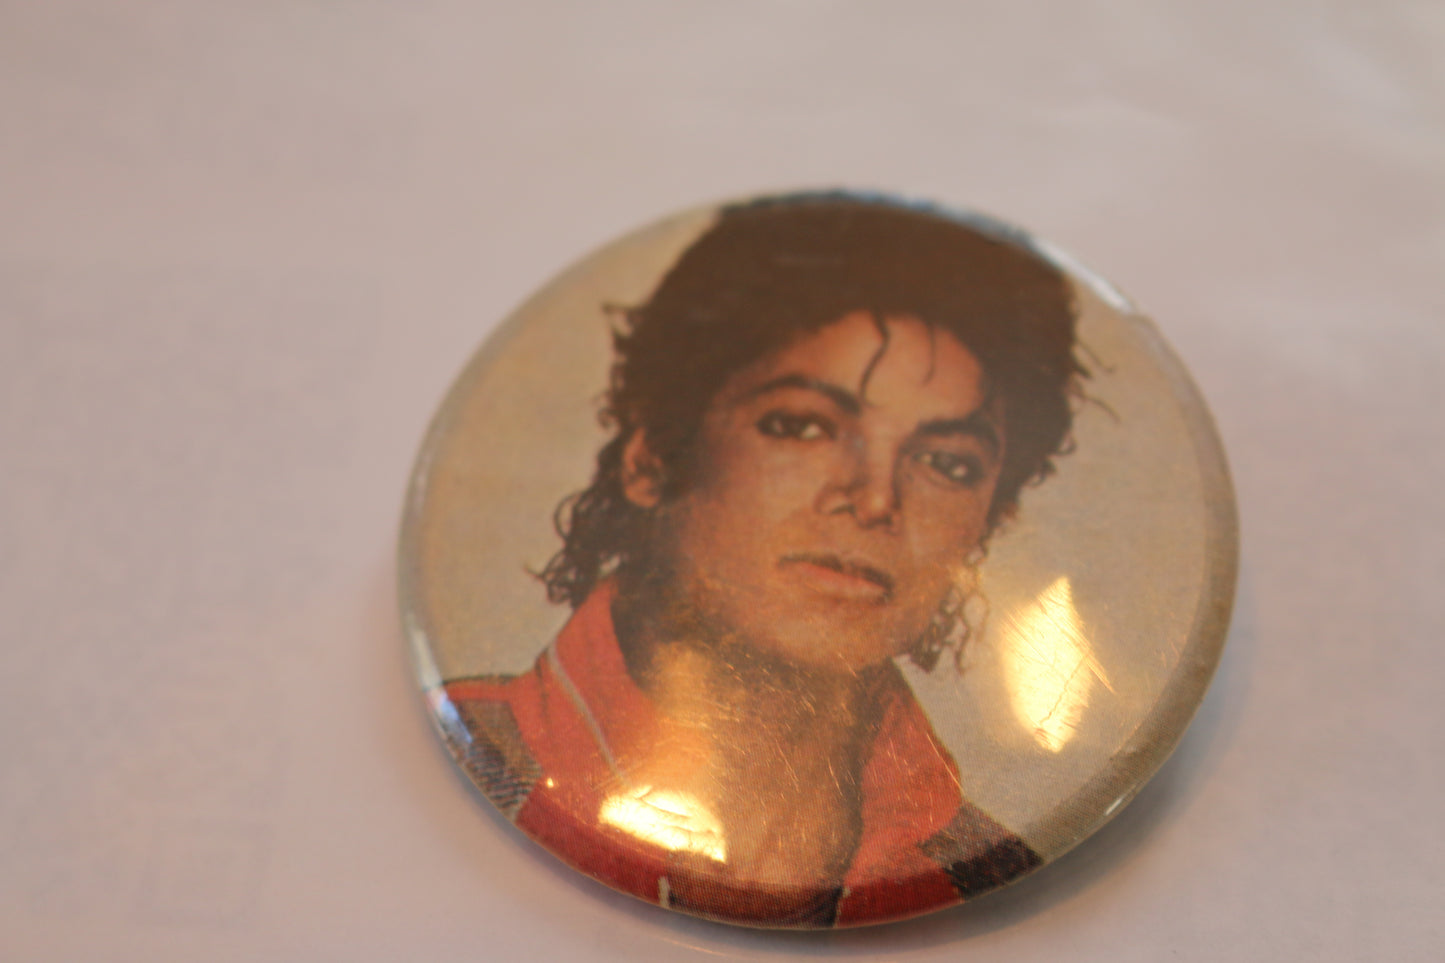 Vintage Michael Jackson Pin - 1980s Head Shot - Celluloid Pin